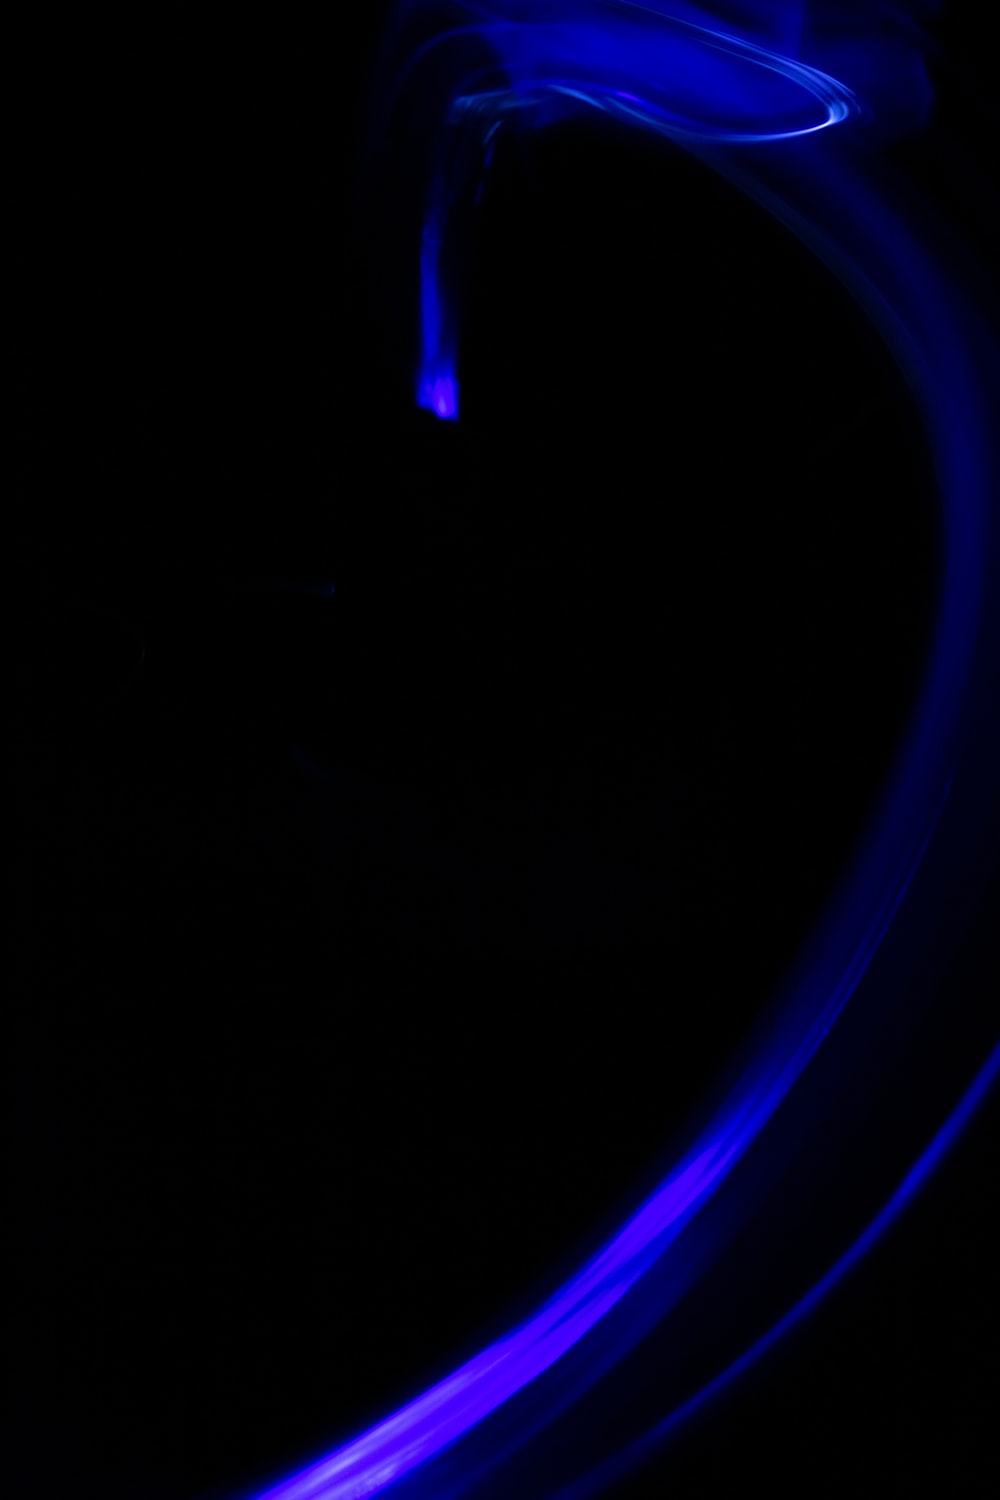 Blue And Black Light Digital Wallpaper Photo Image On